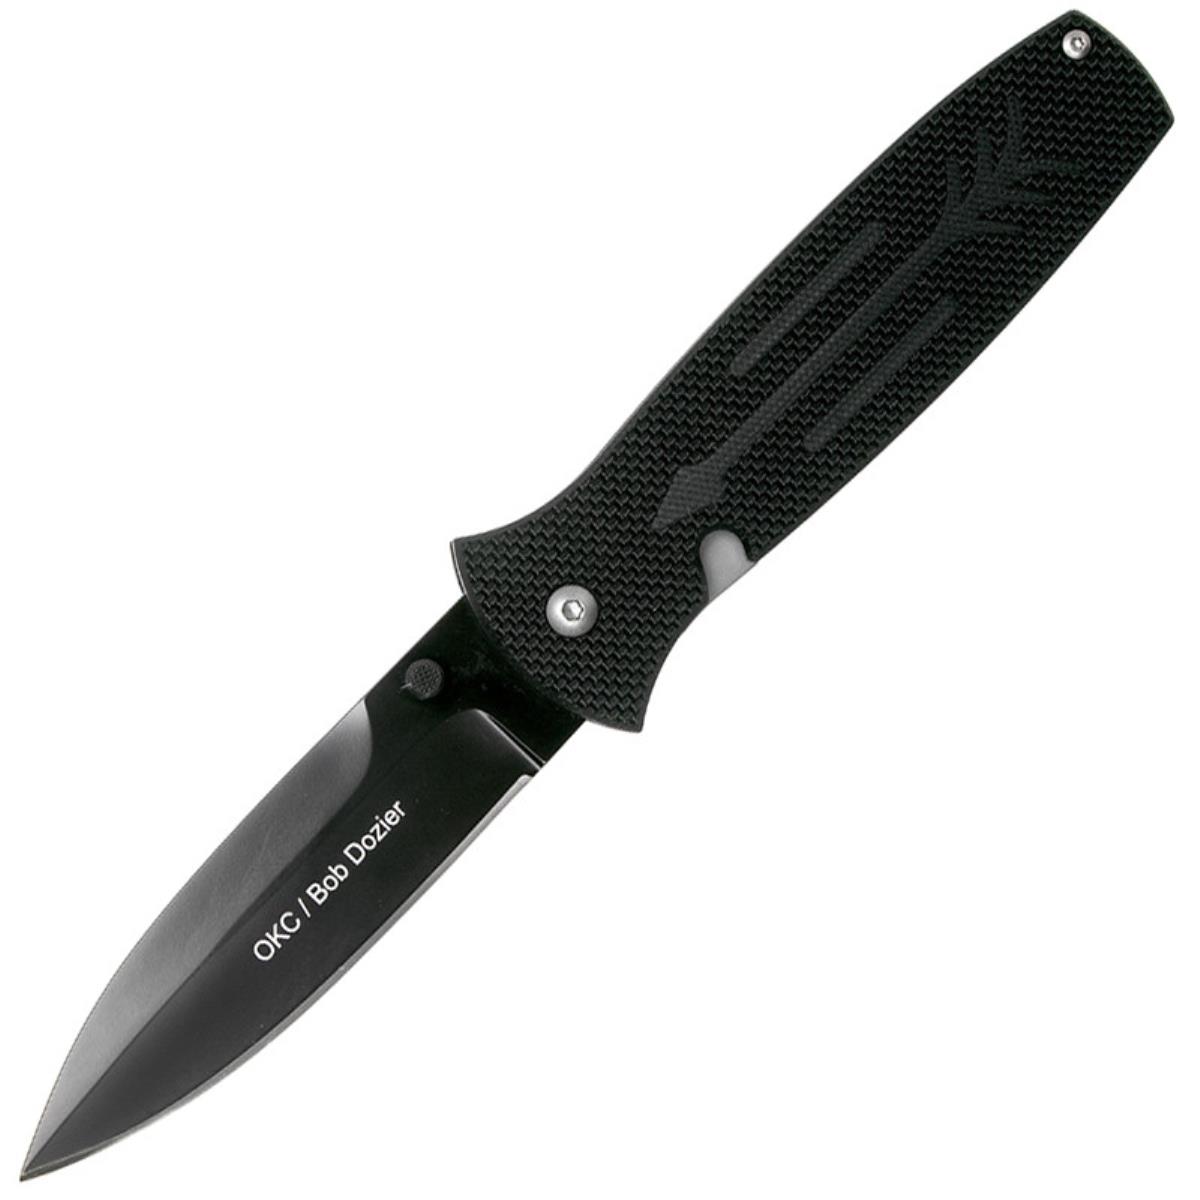 Нож OKC Dozier Arrow складн.,чёрная рукоять, G10, клинок D2, чёрное покрытие (9101)  ONTARIO нож shikra складн коричневая рукоять микарта титан клинок aus8 чёрн покрытие pvd 8599 ontario